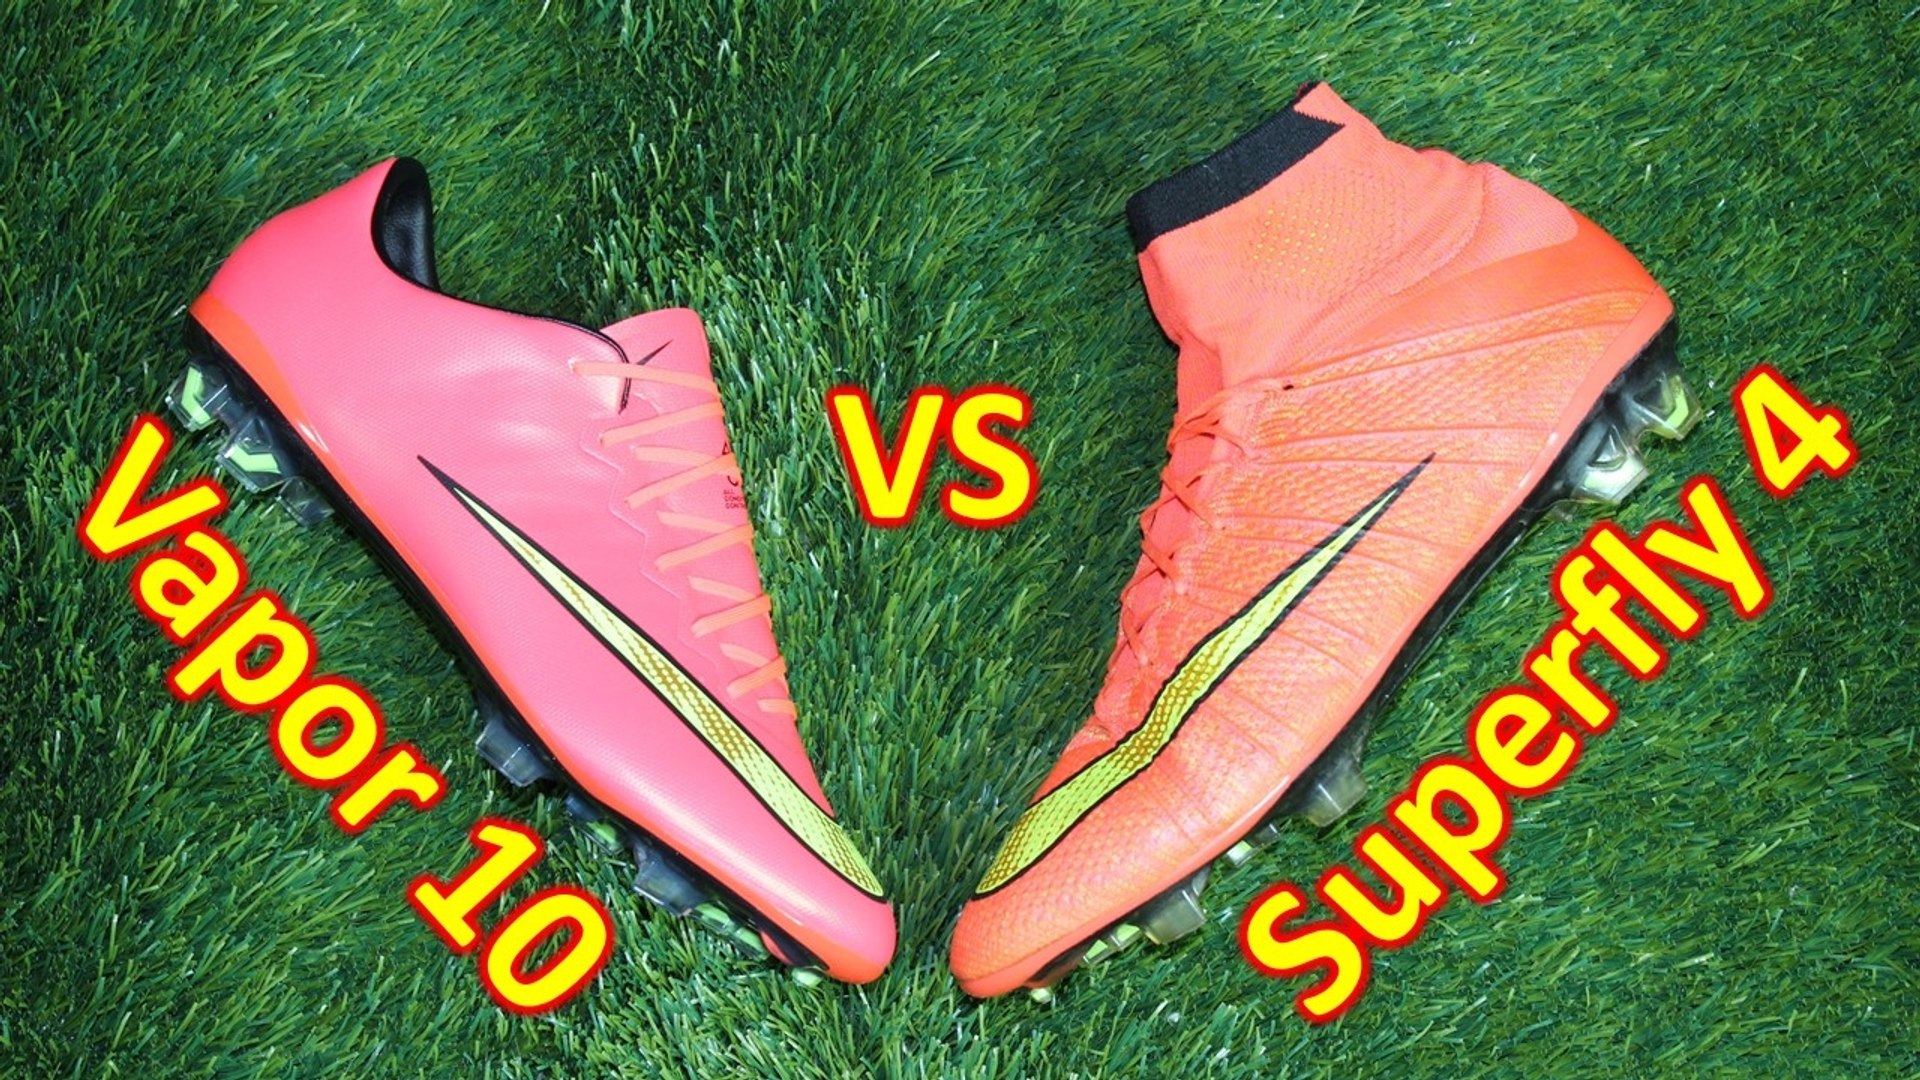 Nike Mercurial 4 vs Mercurial Vapor 10 Comparison & Review - video Dailymotion